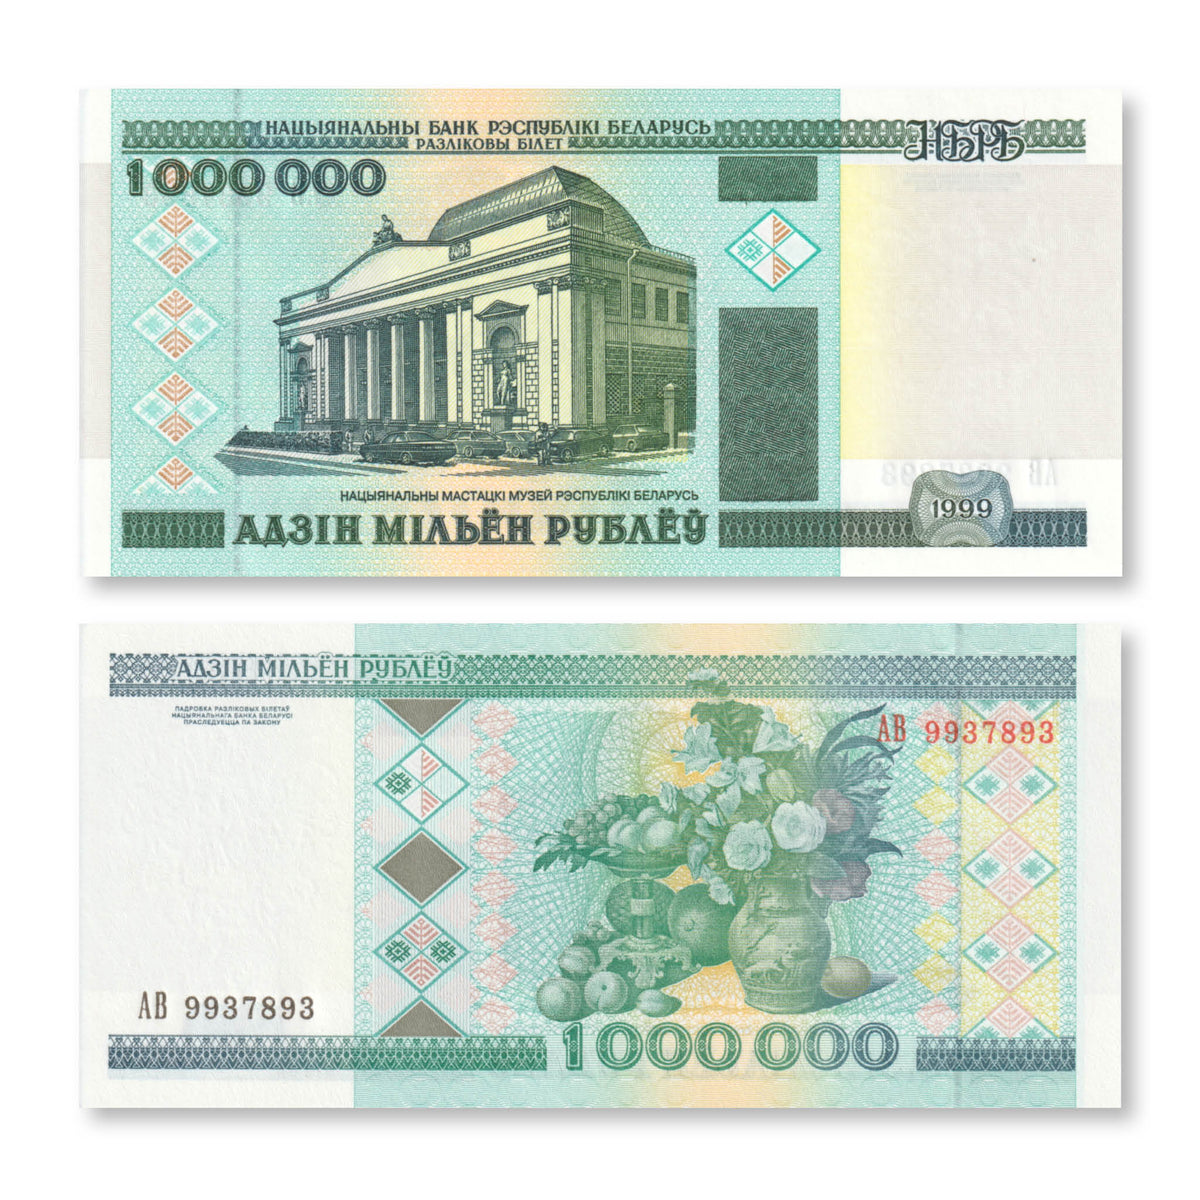 Belarus 1 Million Rubles, 1999, B119a, P19, UNC - Robert's World Money - World Banknotes